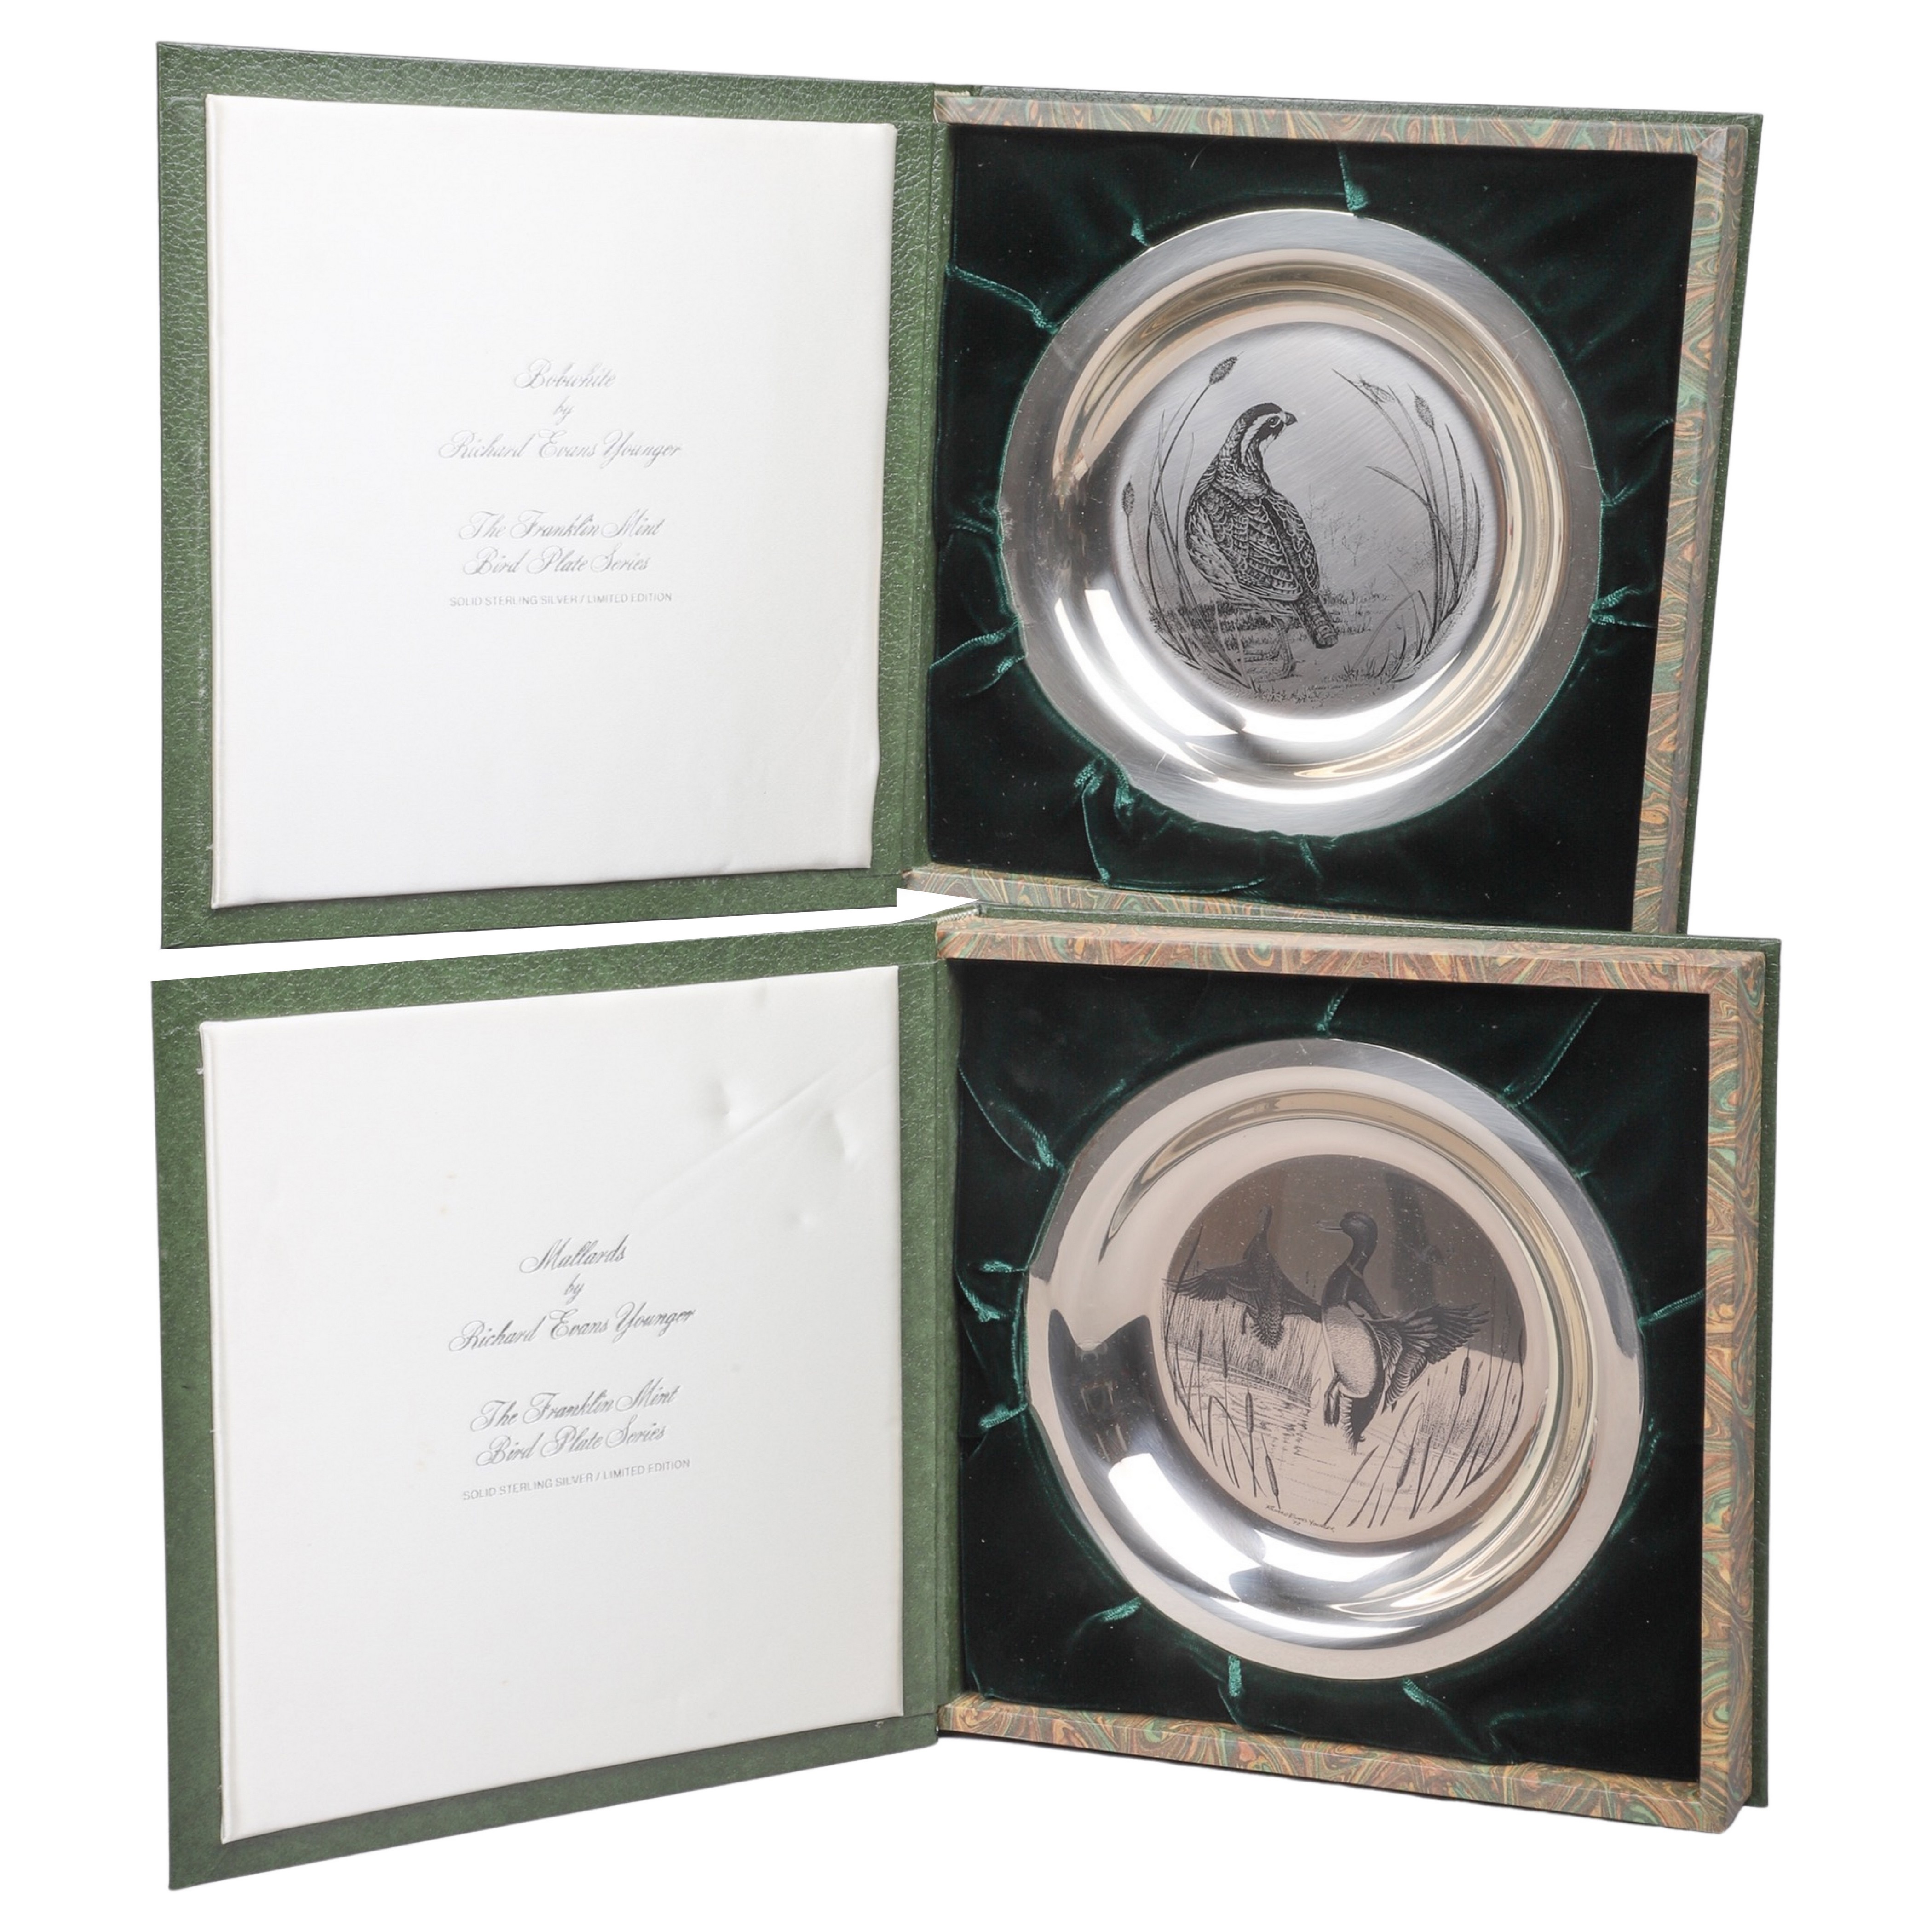 (2) Franklin Mint sterling etched plates